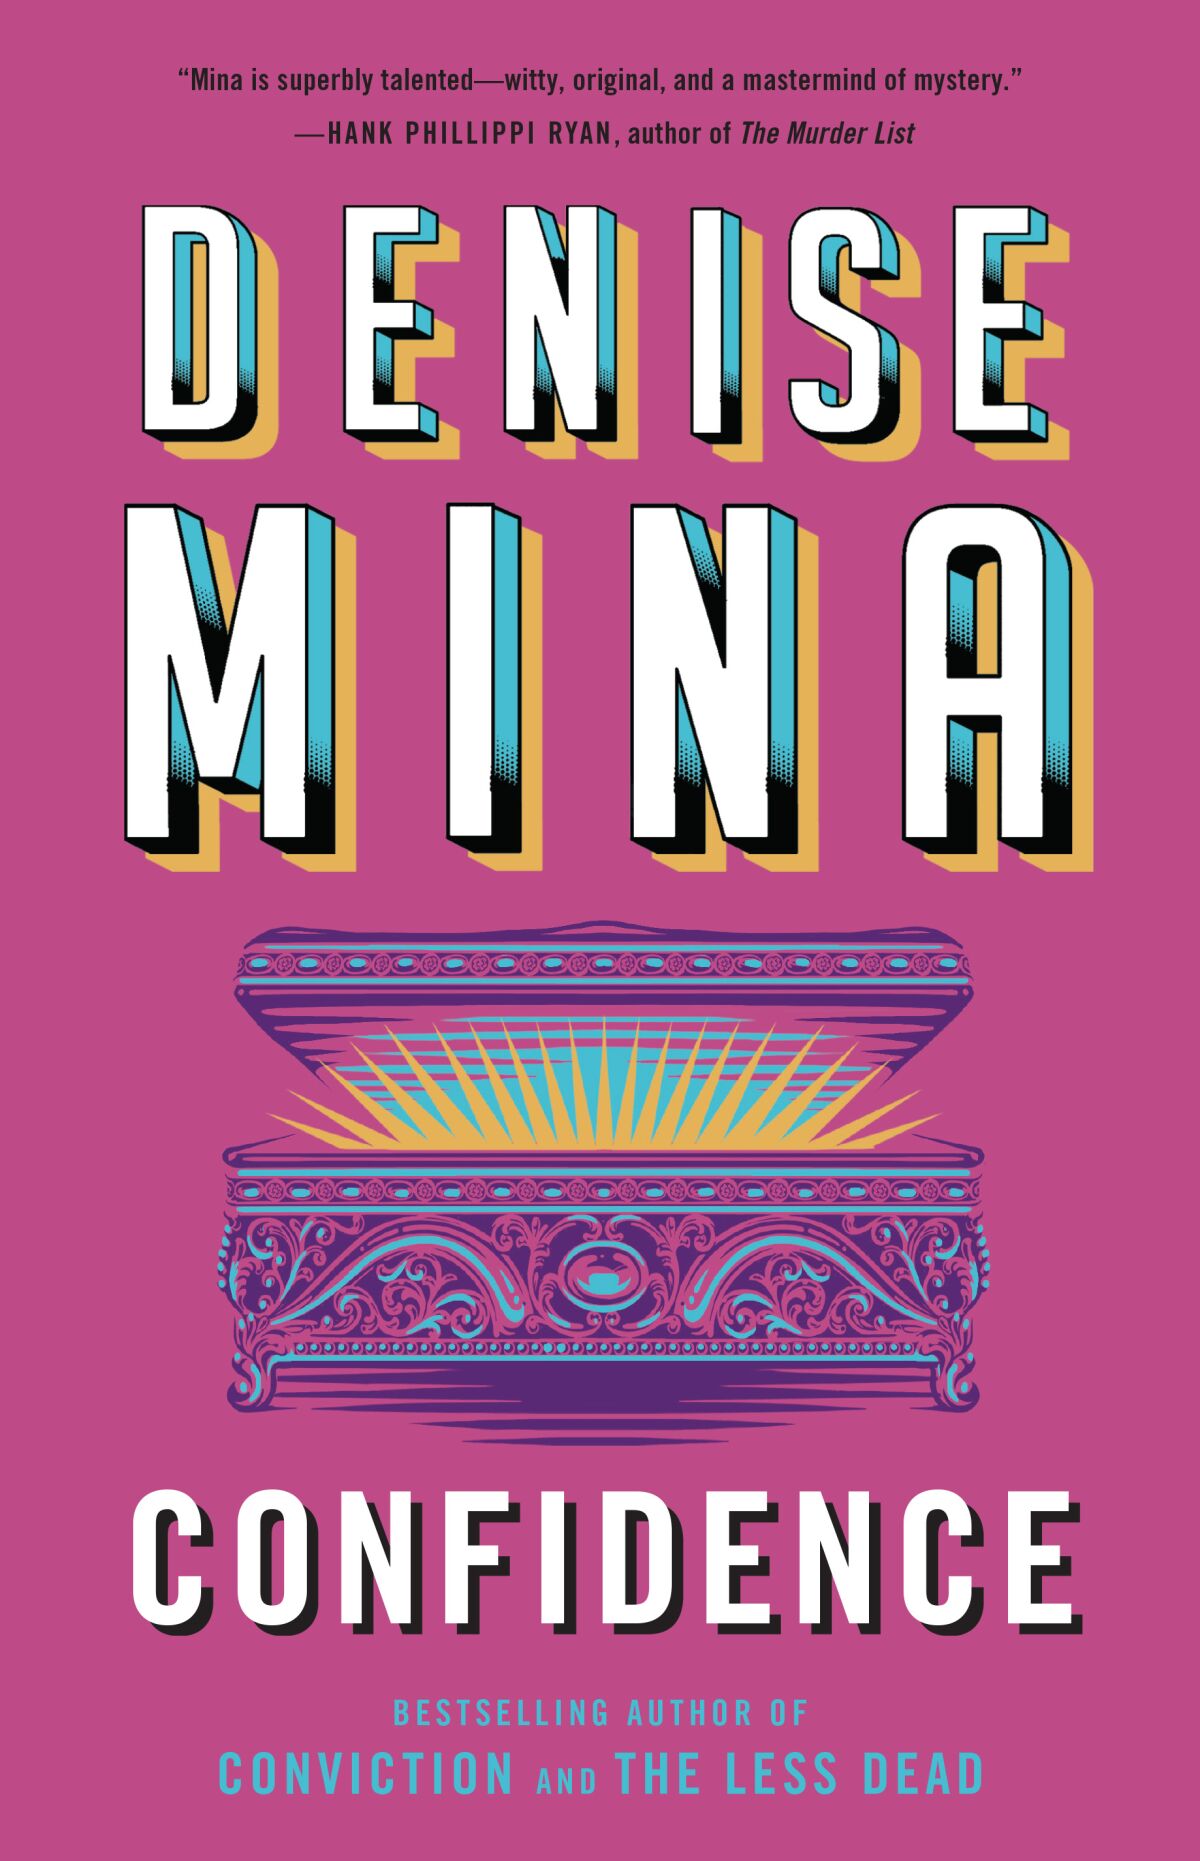 "Confidence," by Denise Mina